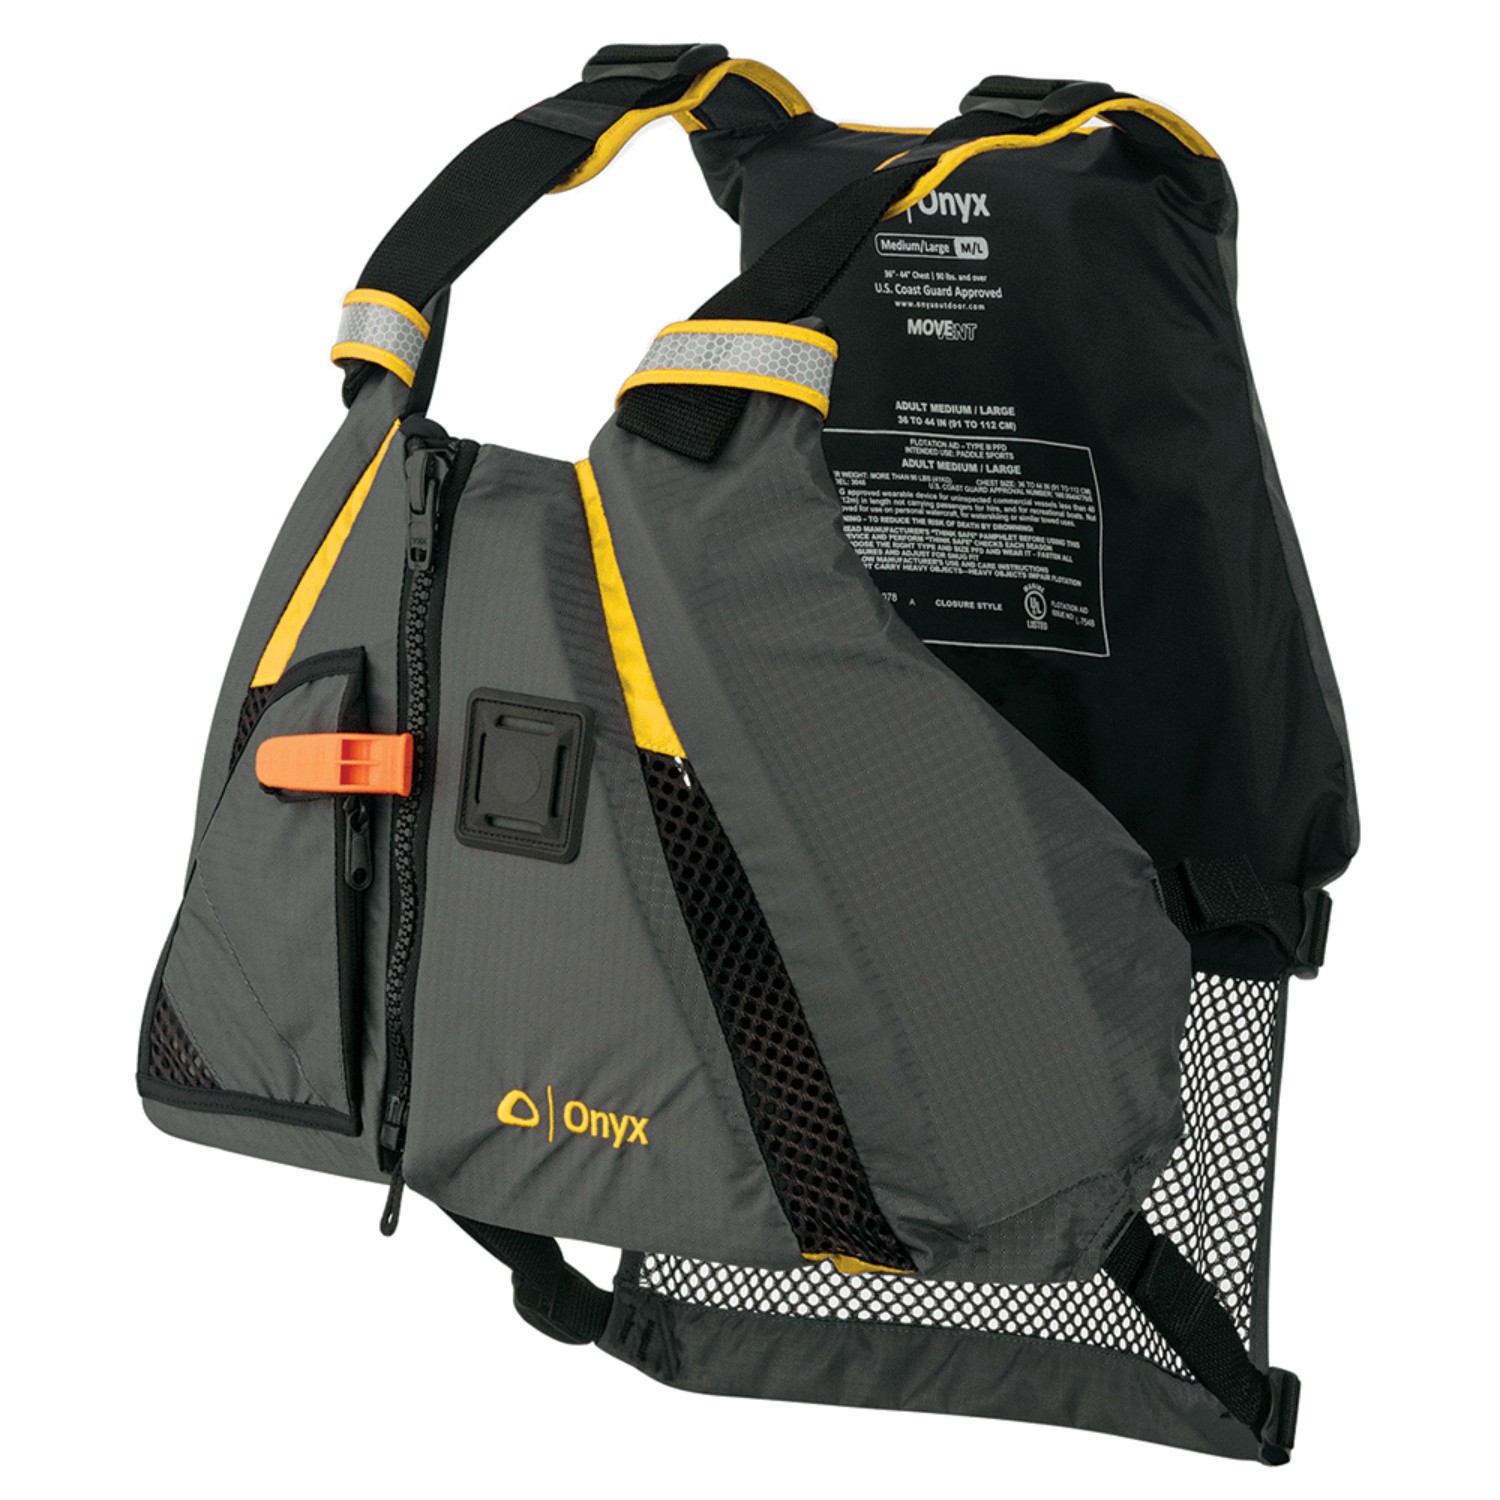 Onyx 122200-300-060-18 Movement Dynamic Vest, Yellow, Size XL/2X